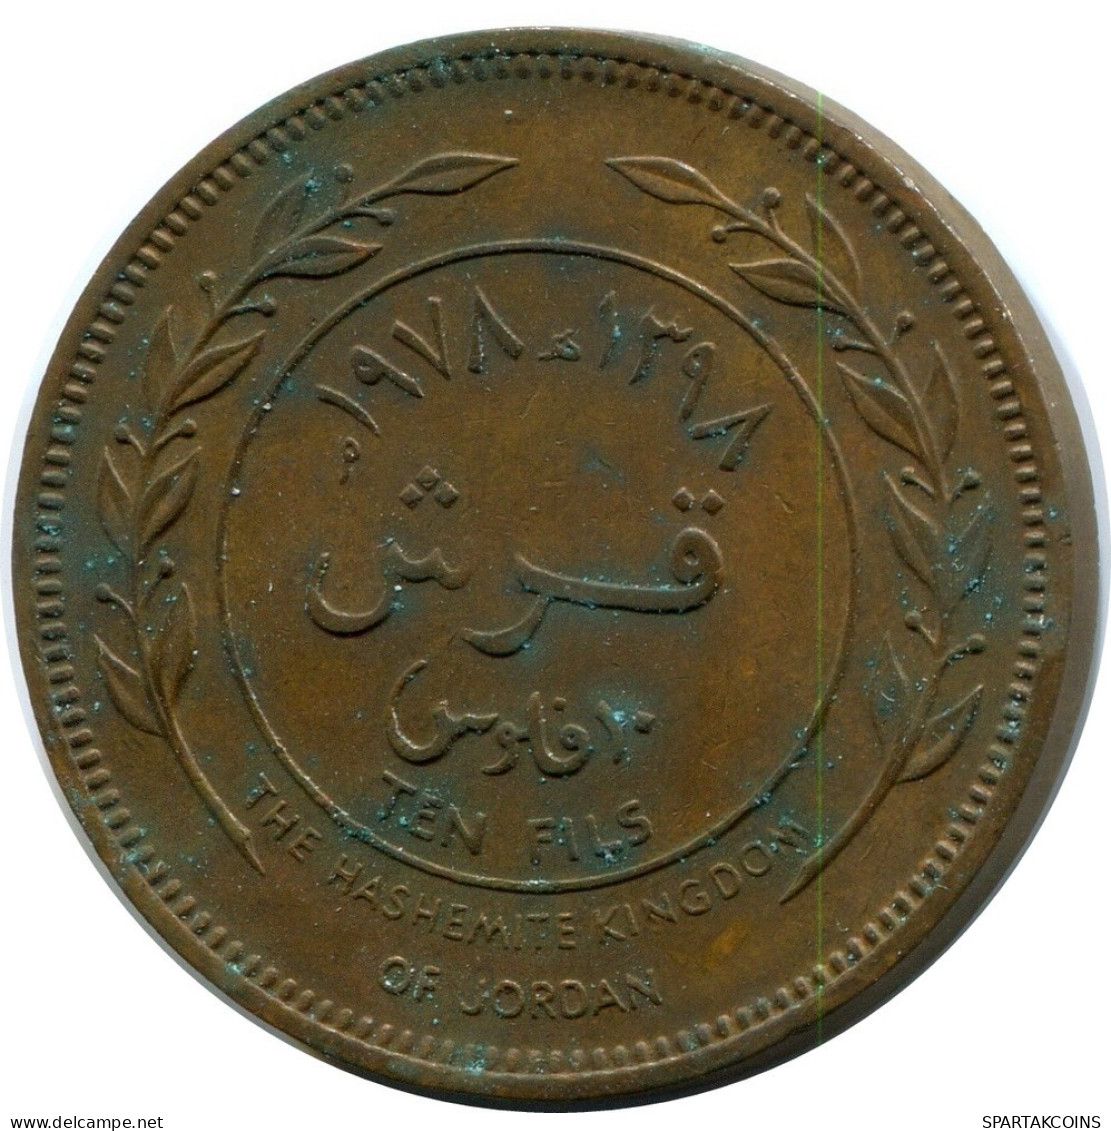 1 QIRSH 10 FILS 1398-1978 JORDANIA JORDAN Islámico Moneda #AW795.E.A - Jordan